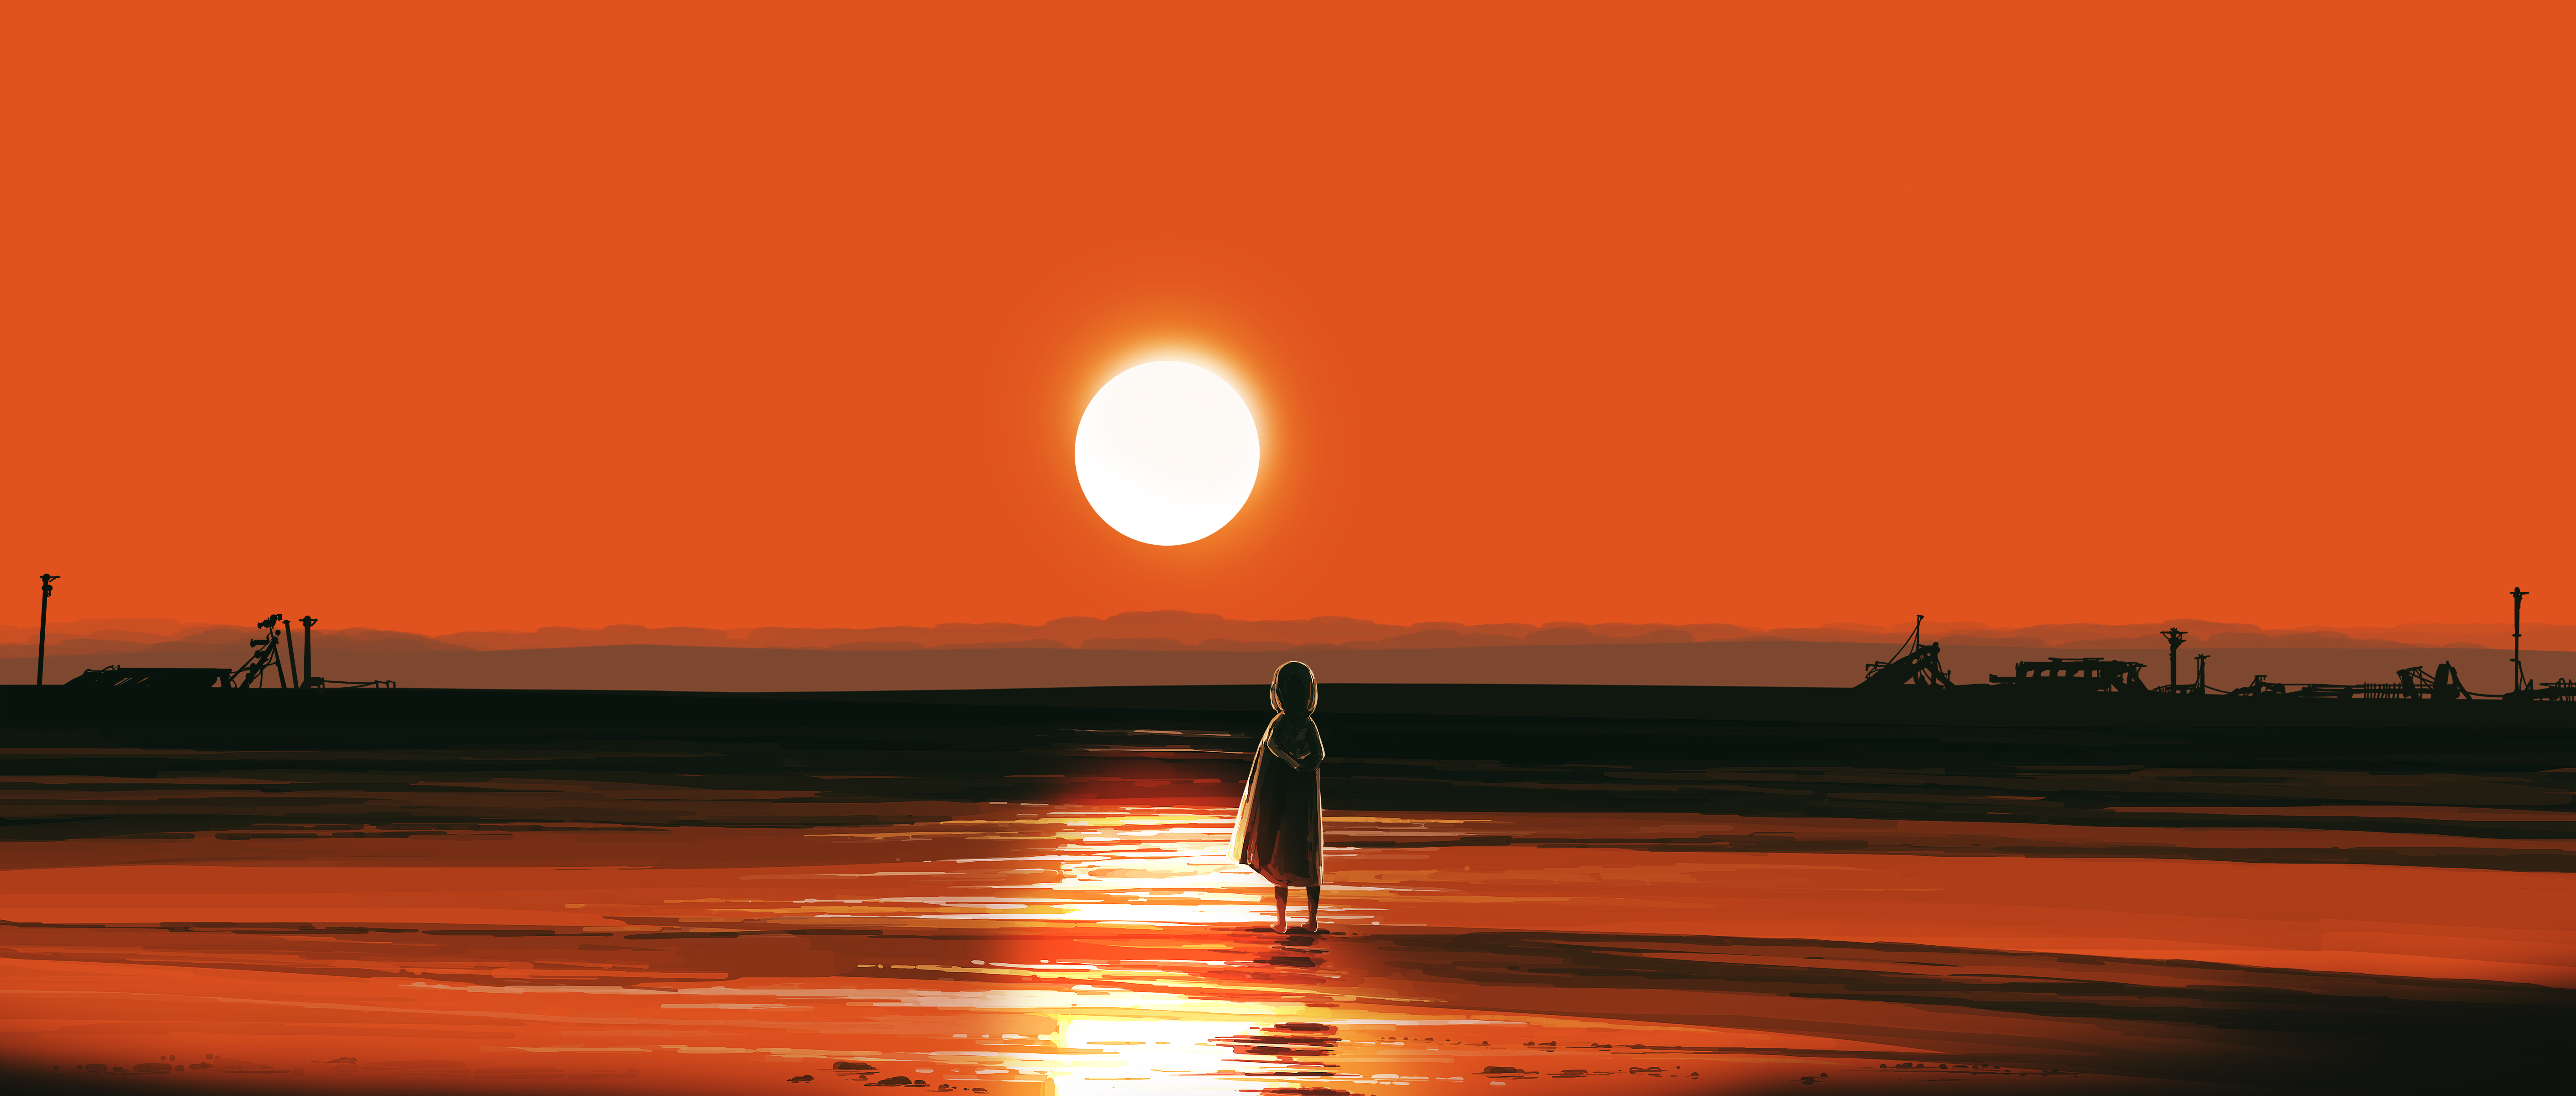 General 5640x2400 Gracile digital art artwork wide screen sunset landscape orange nature Sun